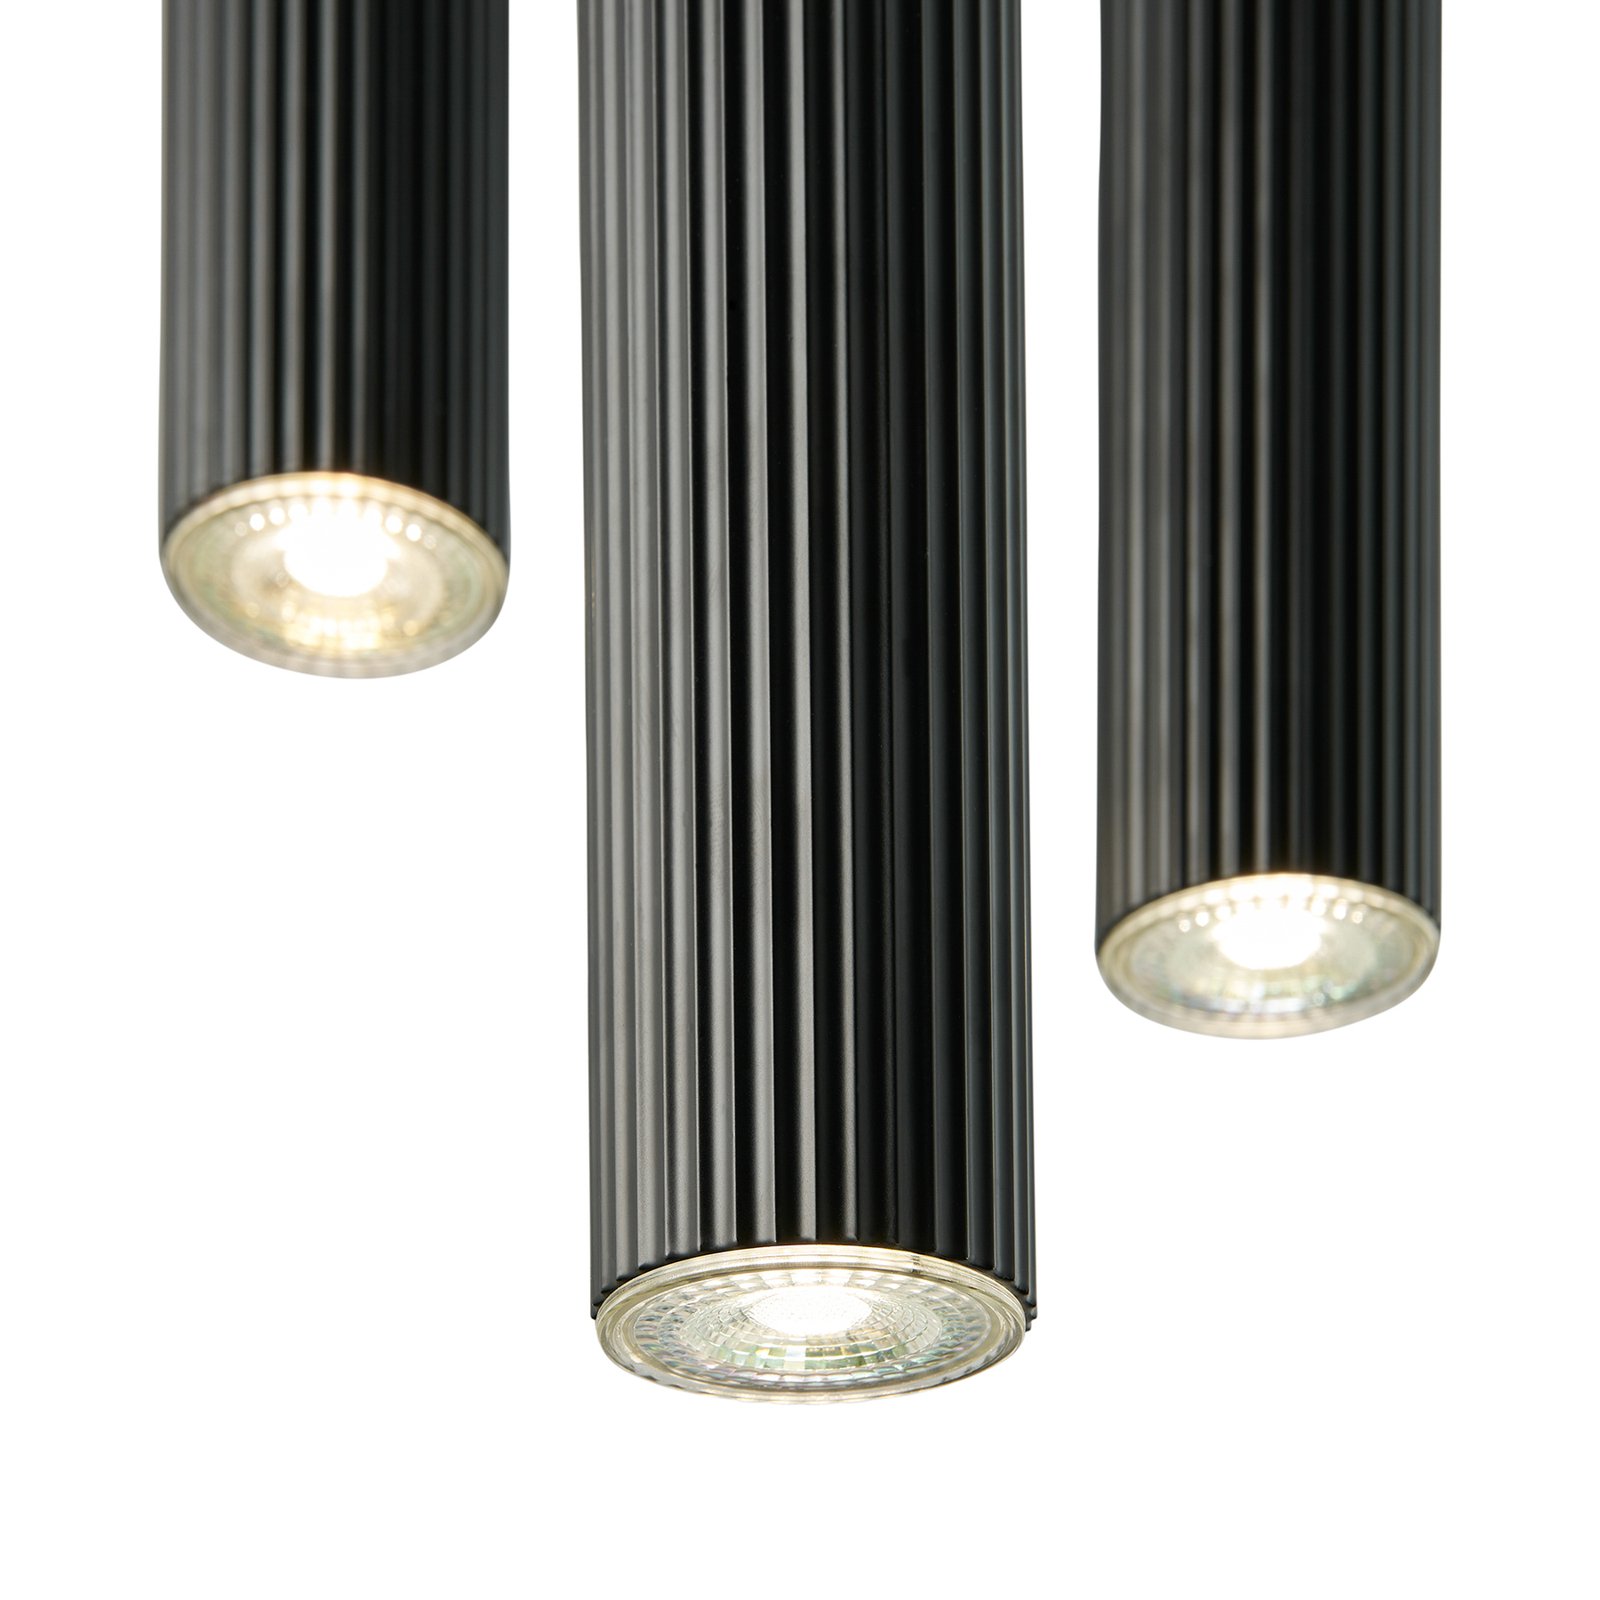 Vico pendant light, 3-bulb, rondel, metal, black